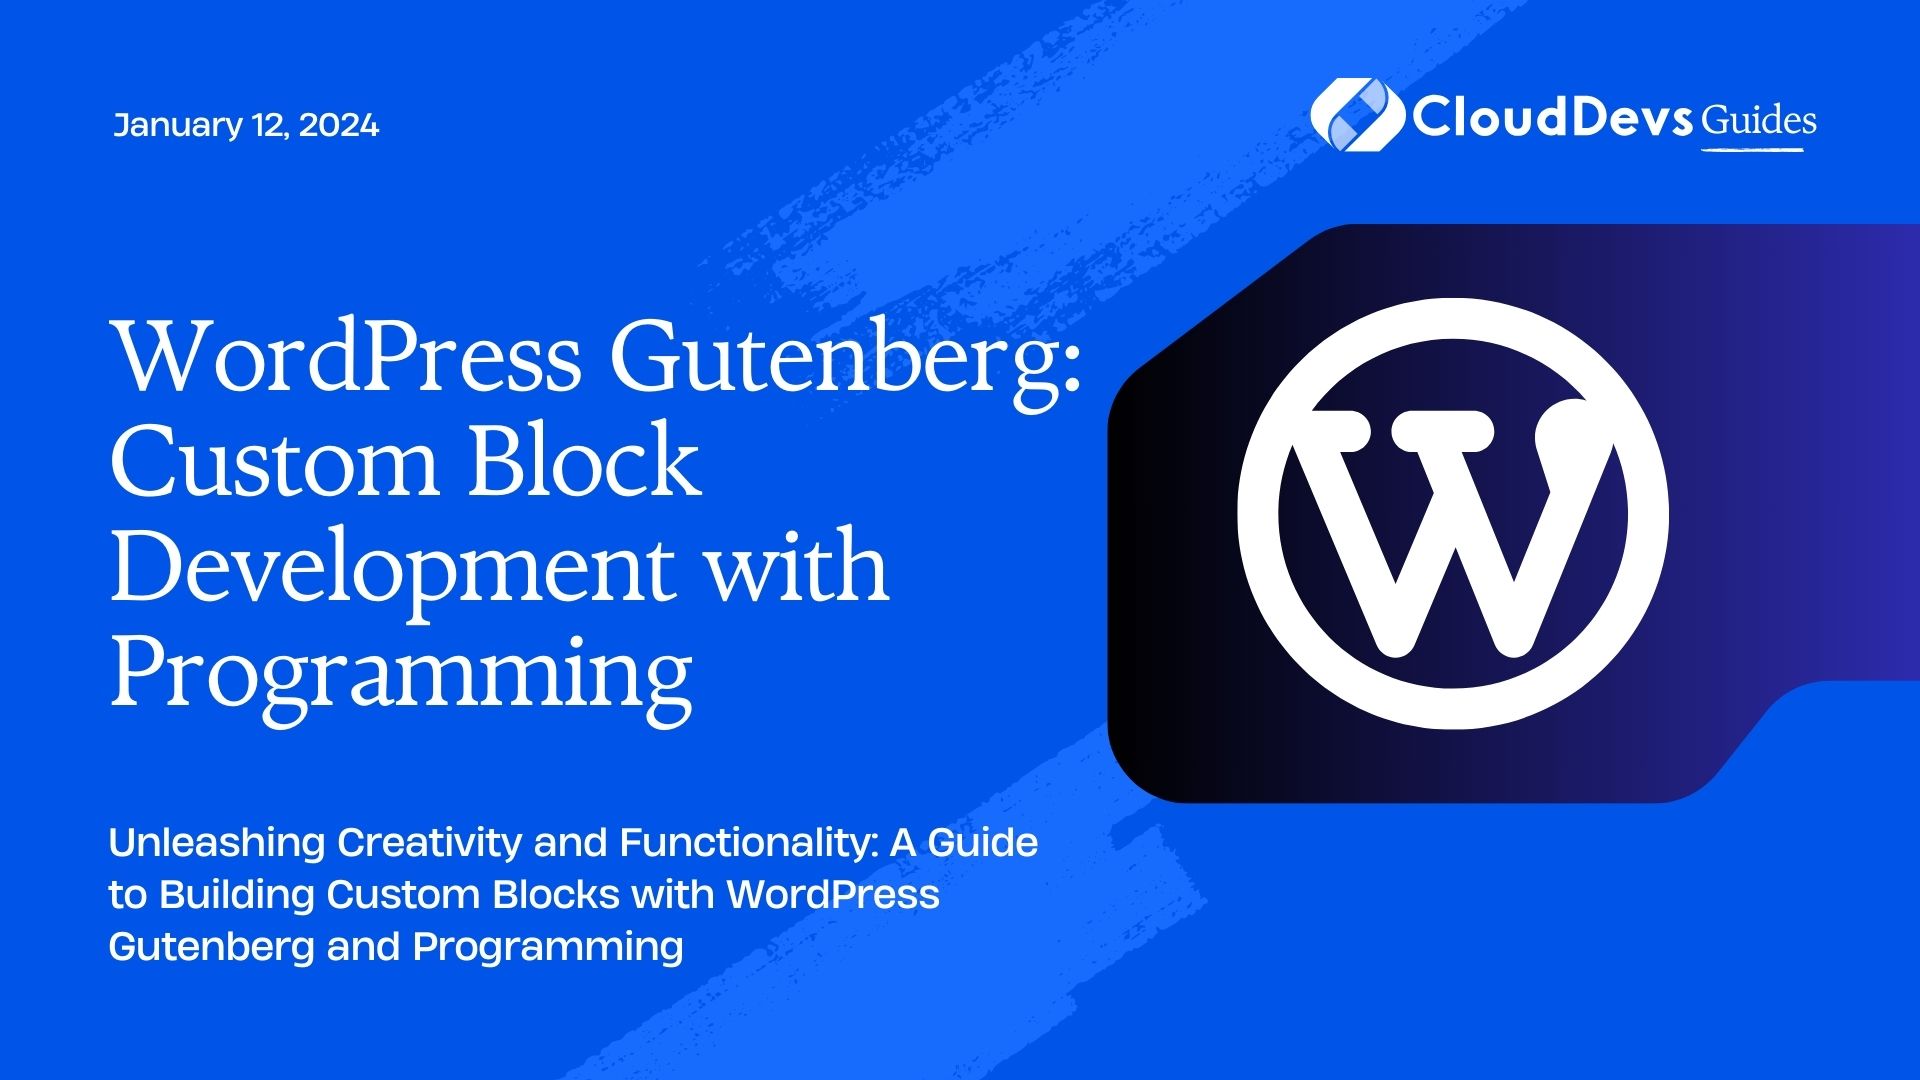 WordPress Gutenberg: Custom Block Development with Programming